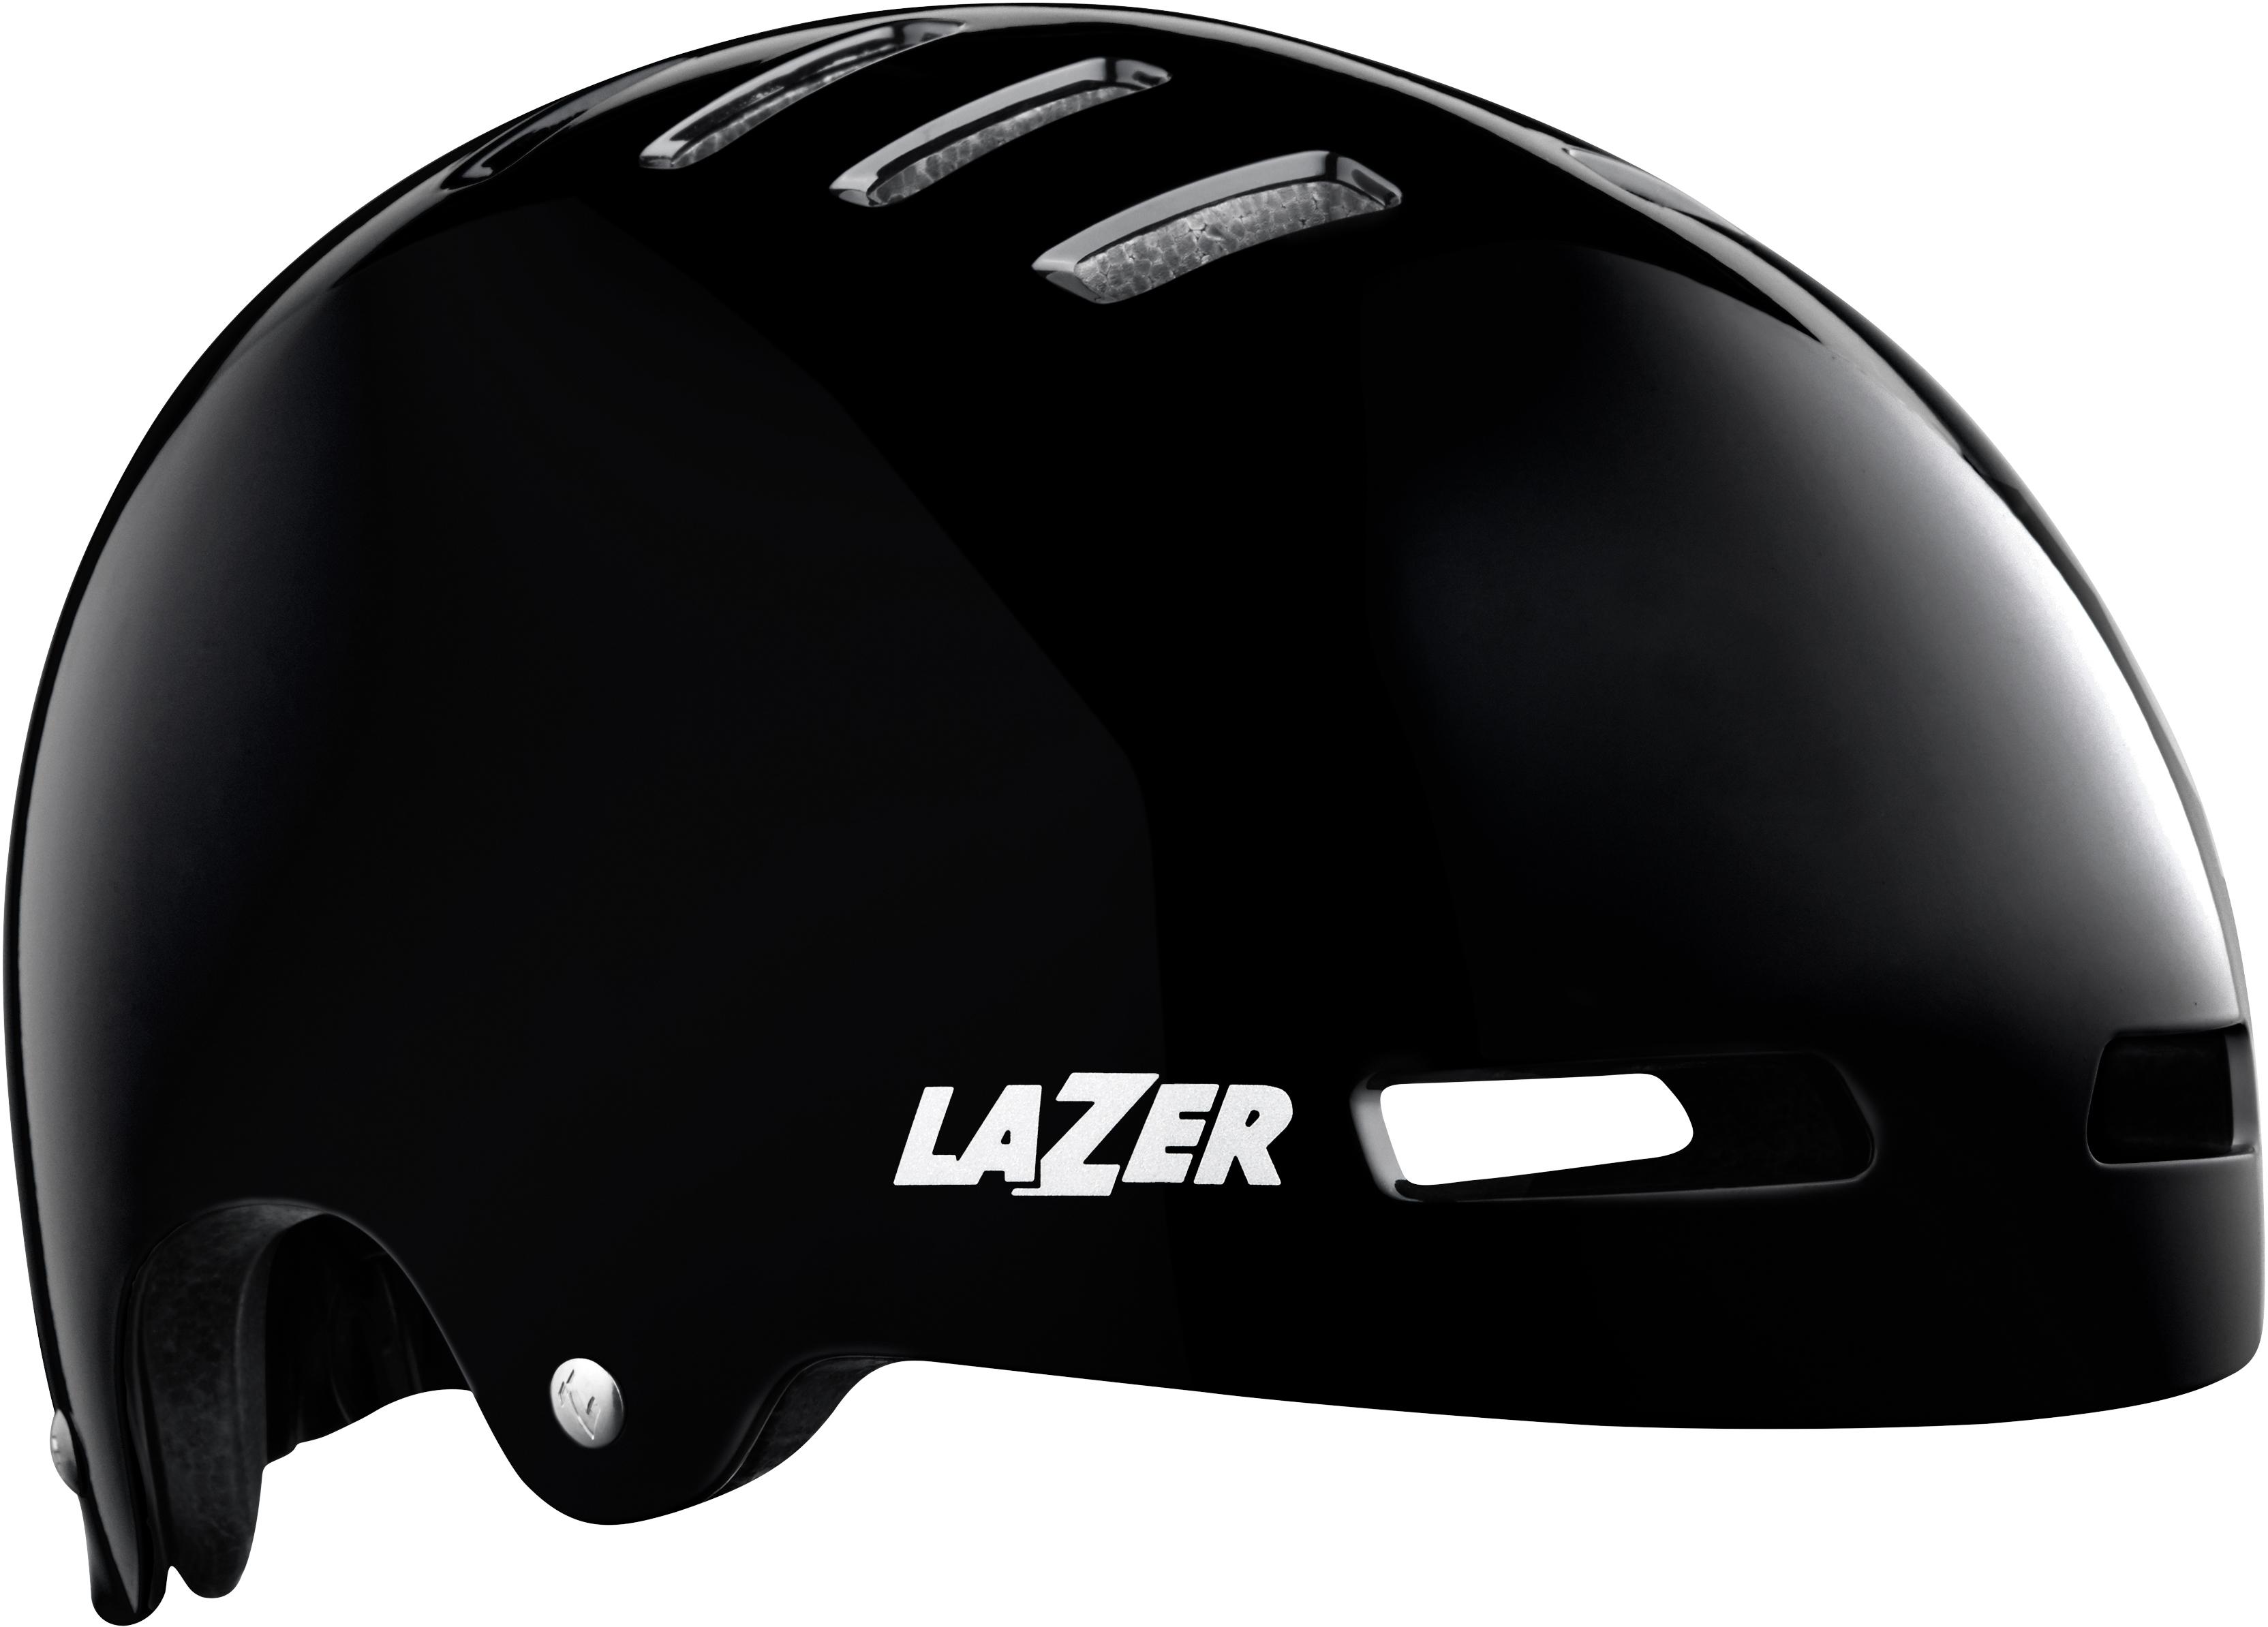 Lazer One Helmet - Black Gloss, Medium